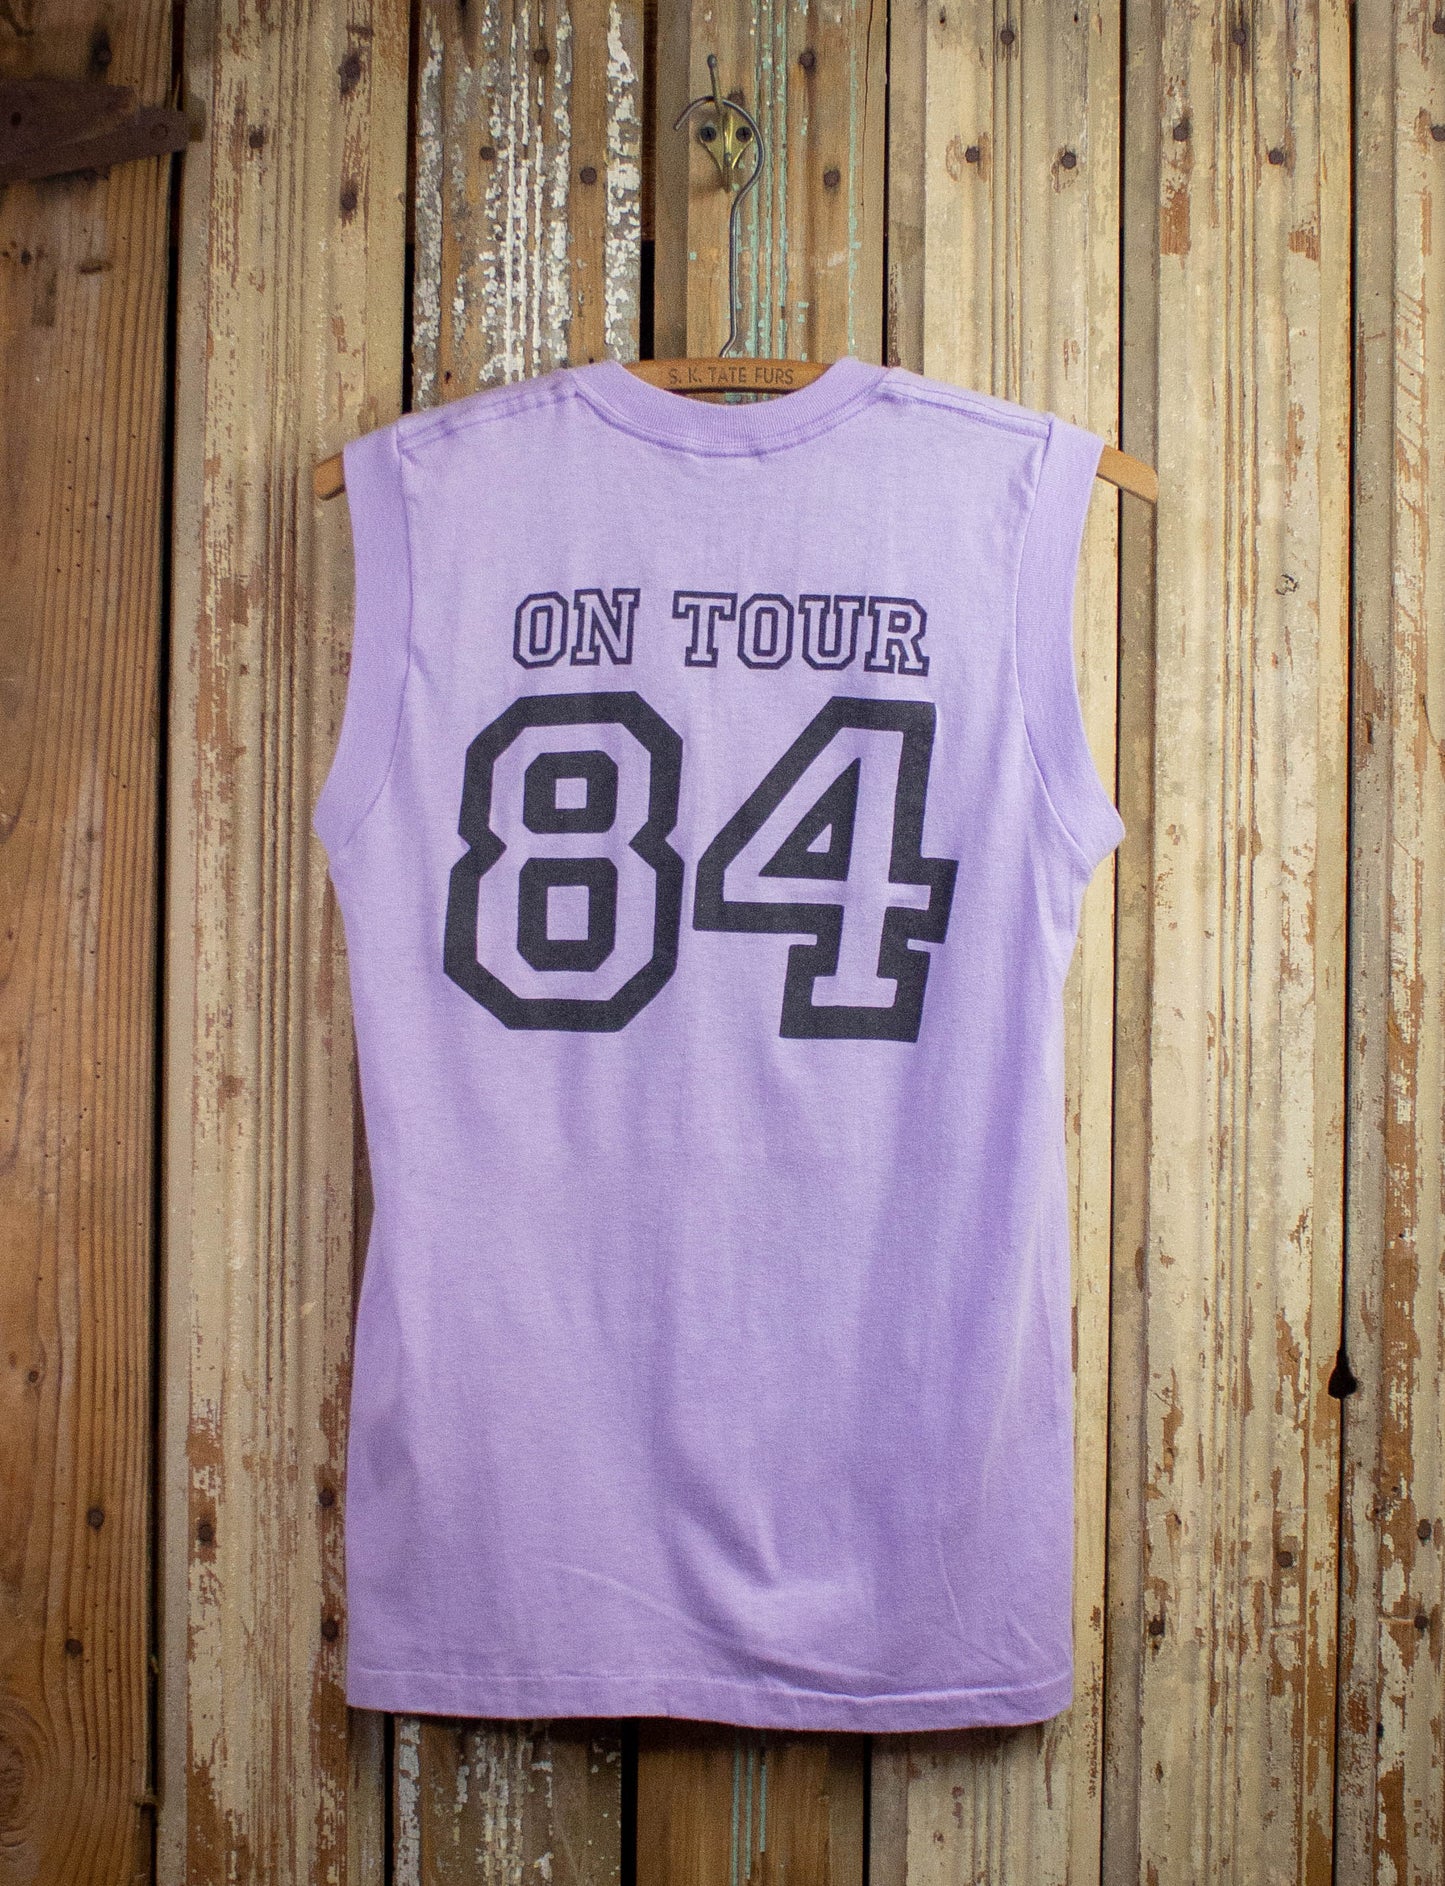 Vintage Jefferson Starship Concert Muscle Shirt 1984 Purple Small